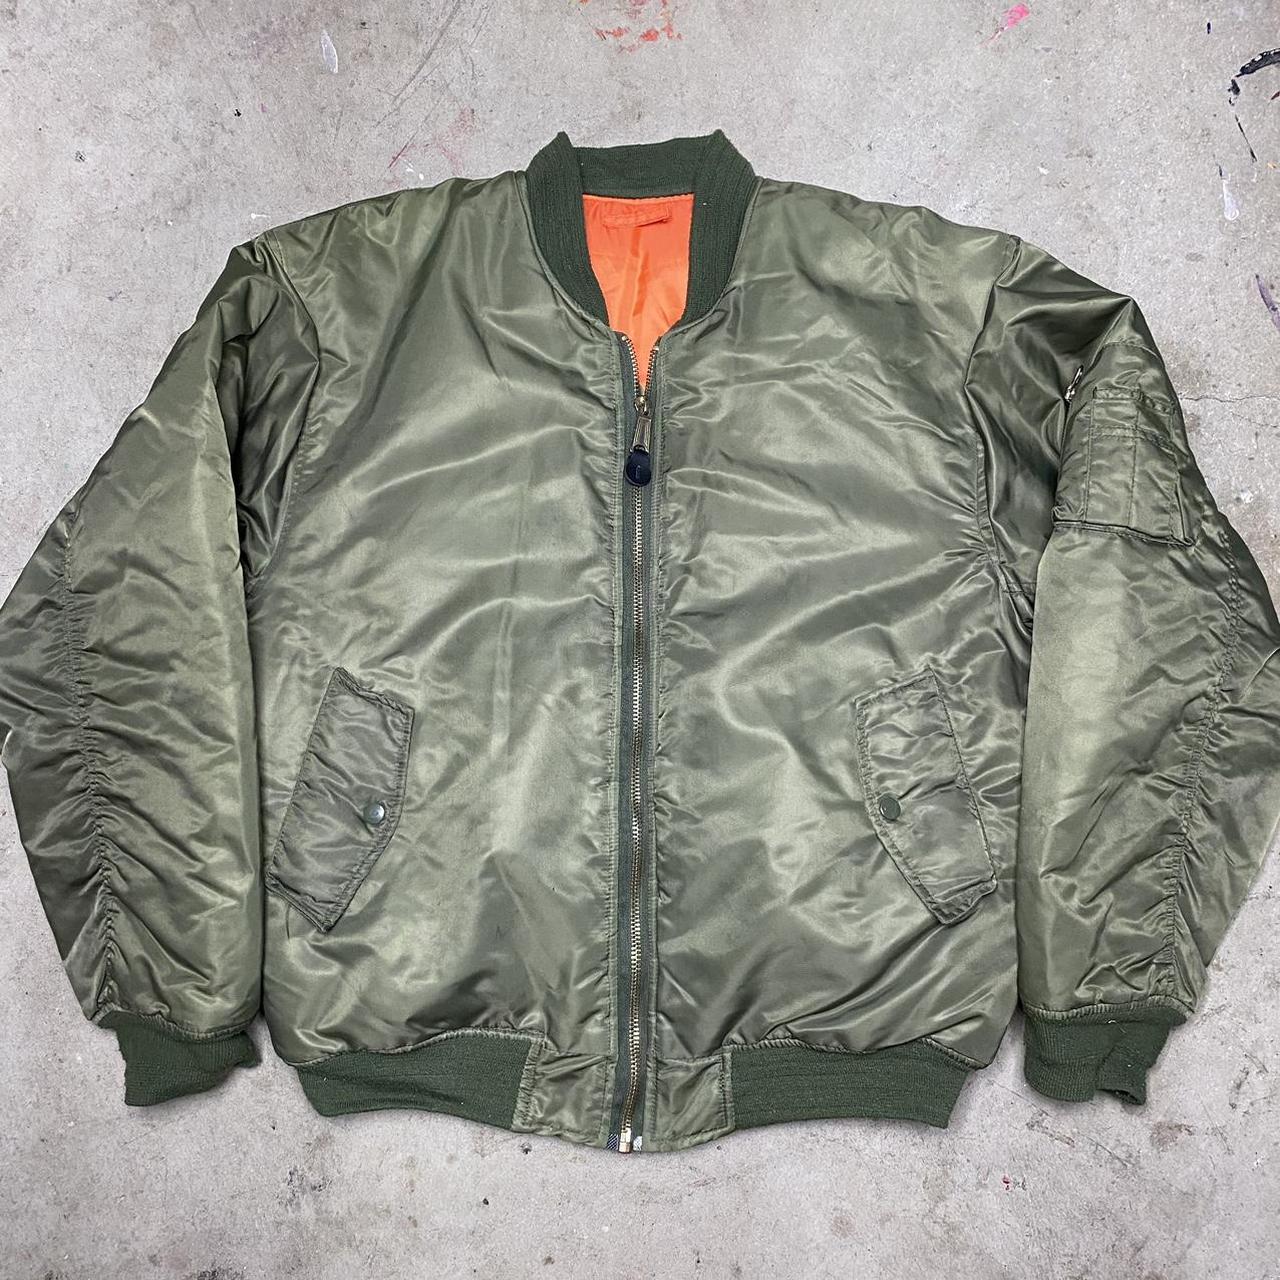 Men's Green and Orange Jacket | Depop